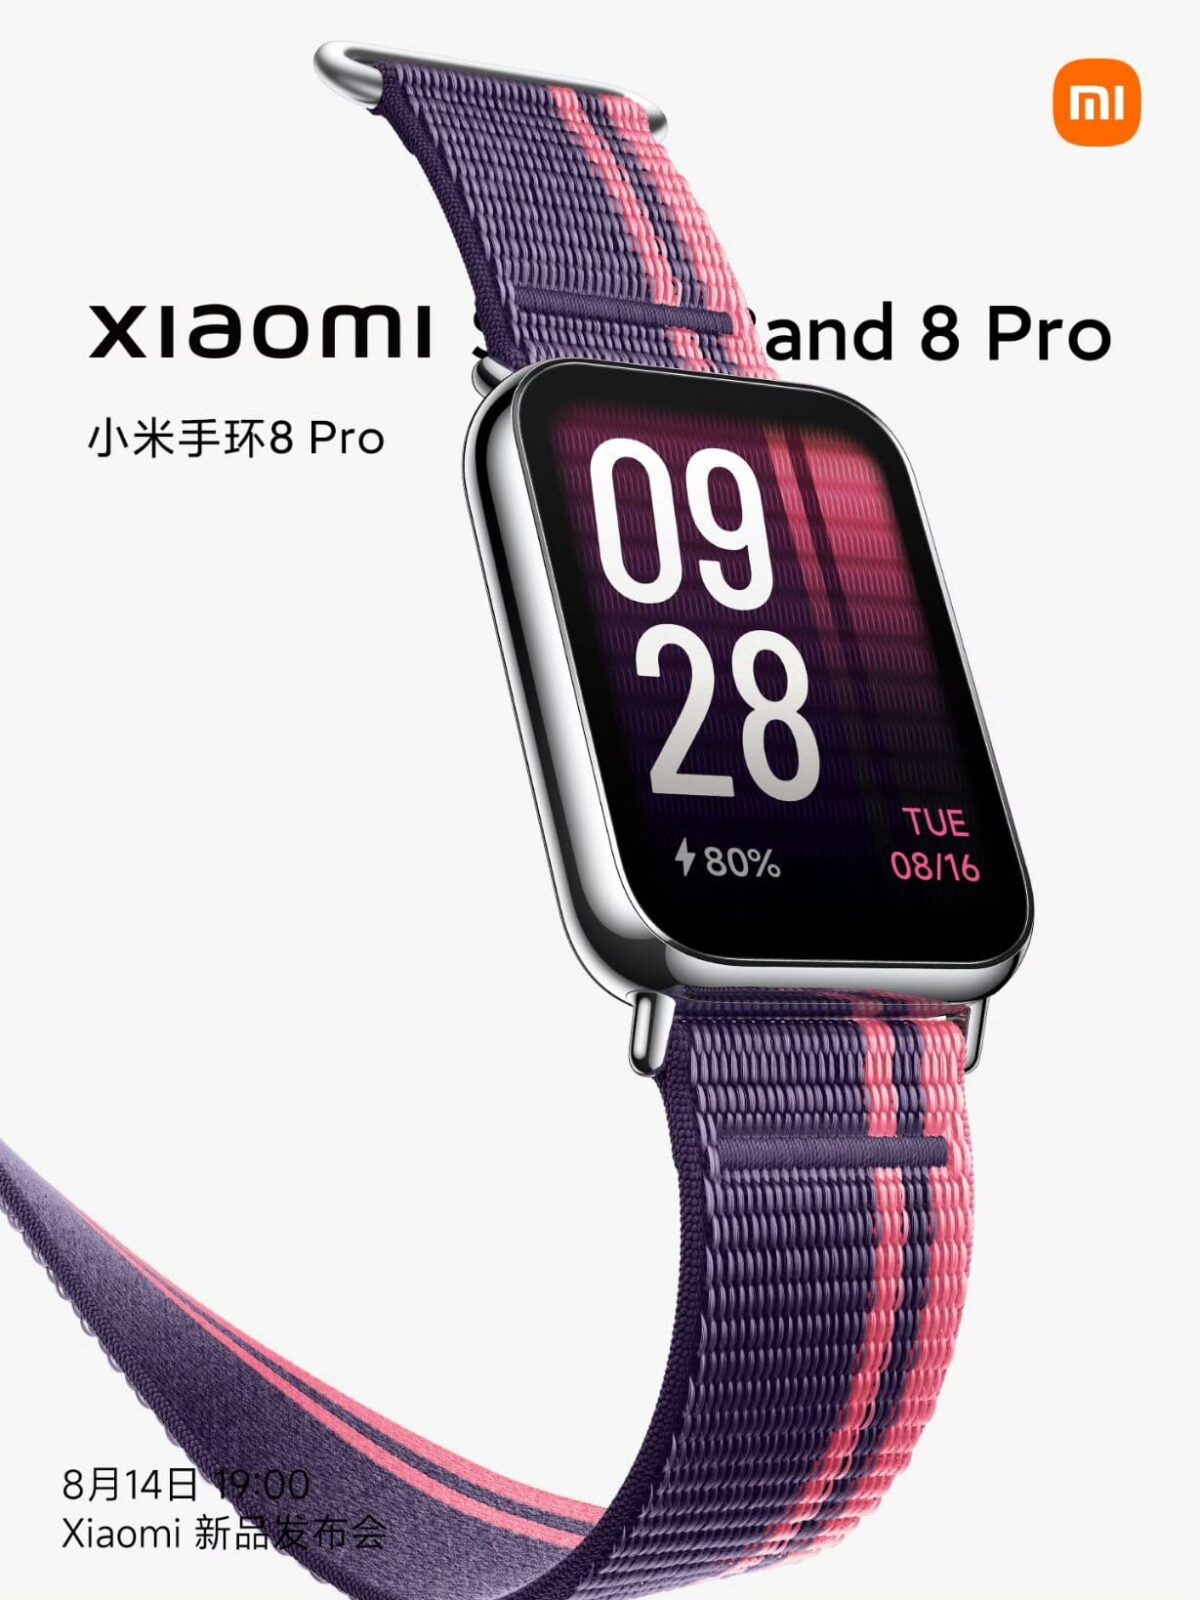 Xiaomi Smart Band 8 Pro desde 69,99 €